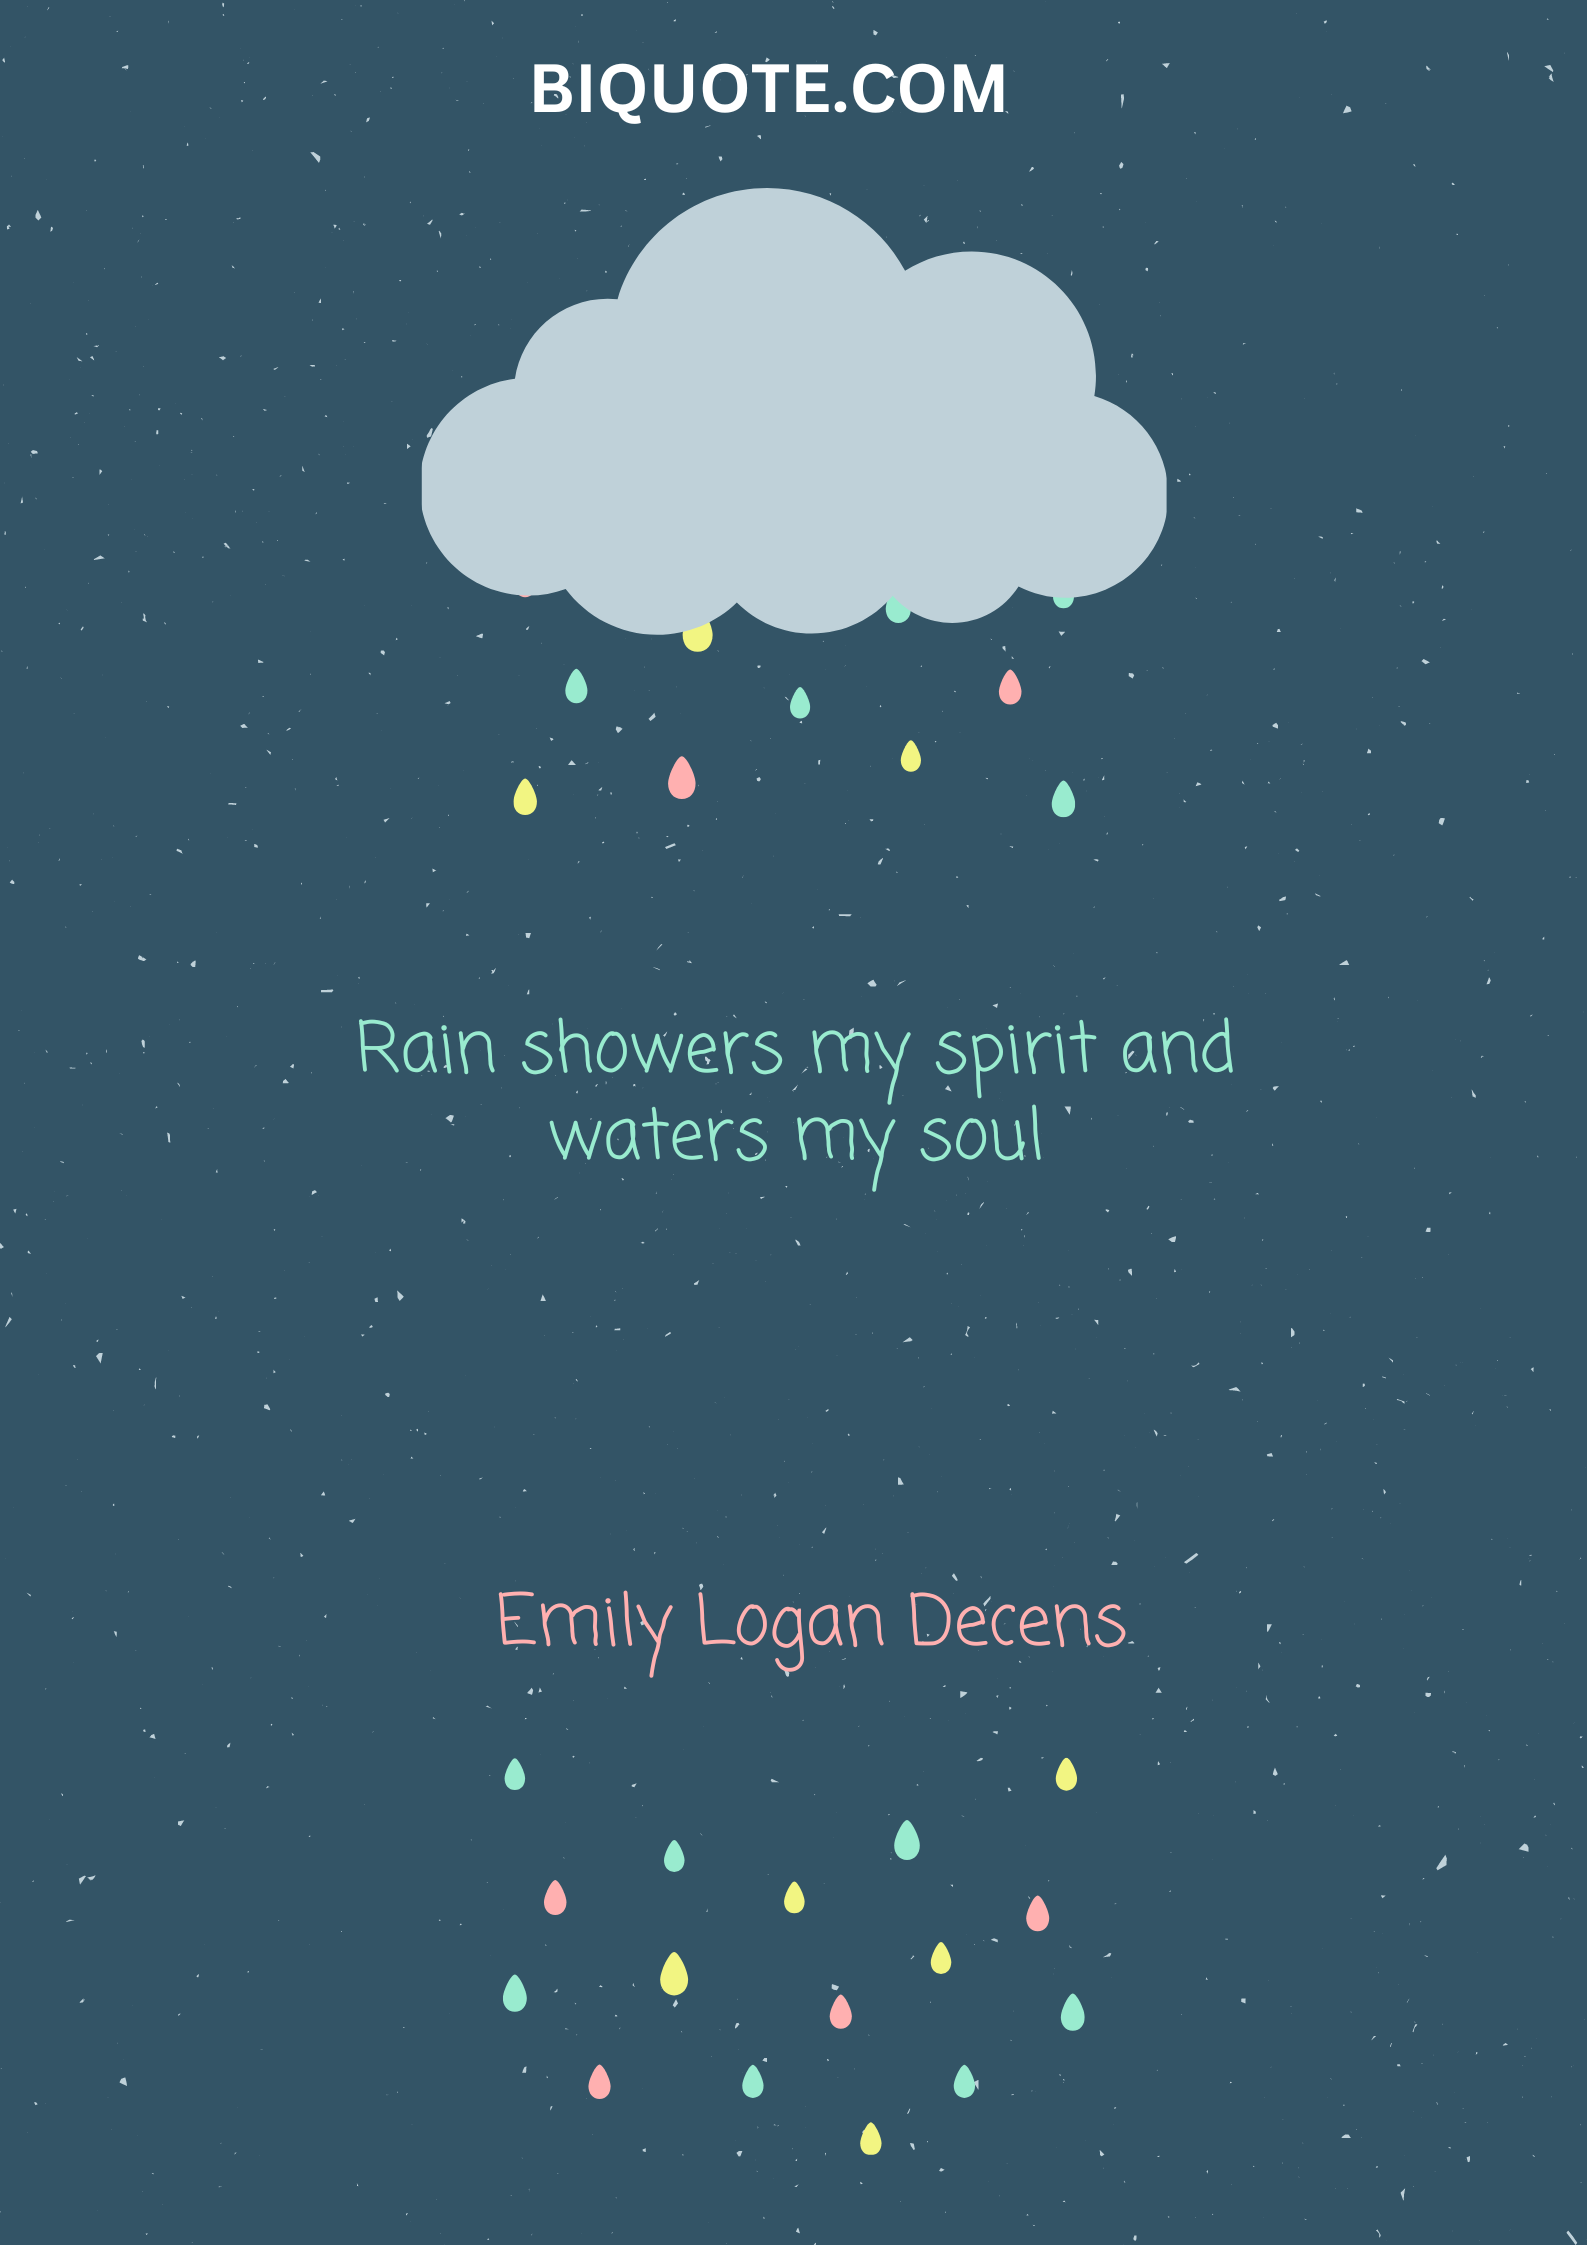 Emily Logan Decens